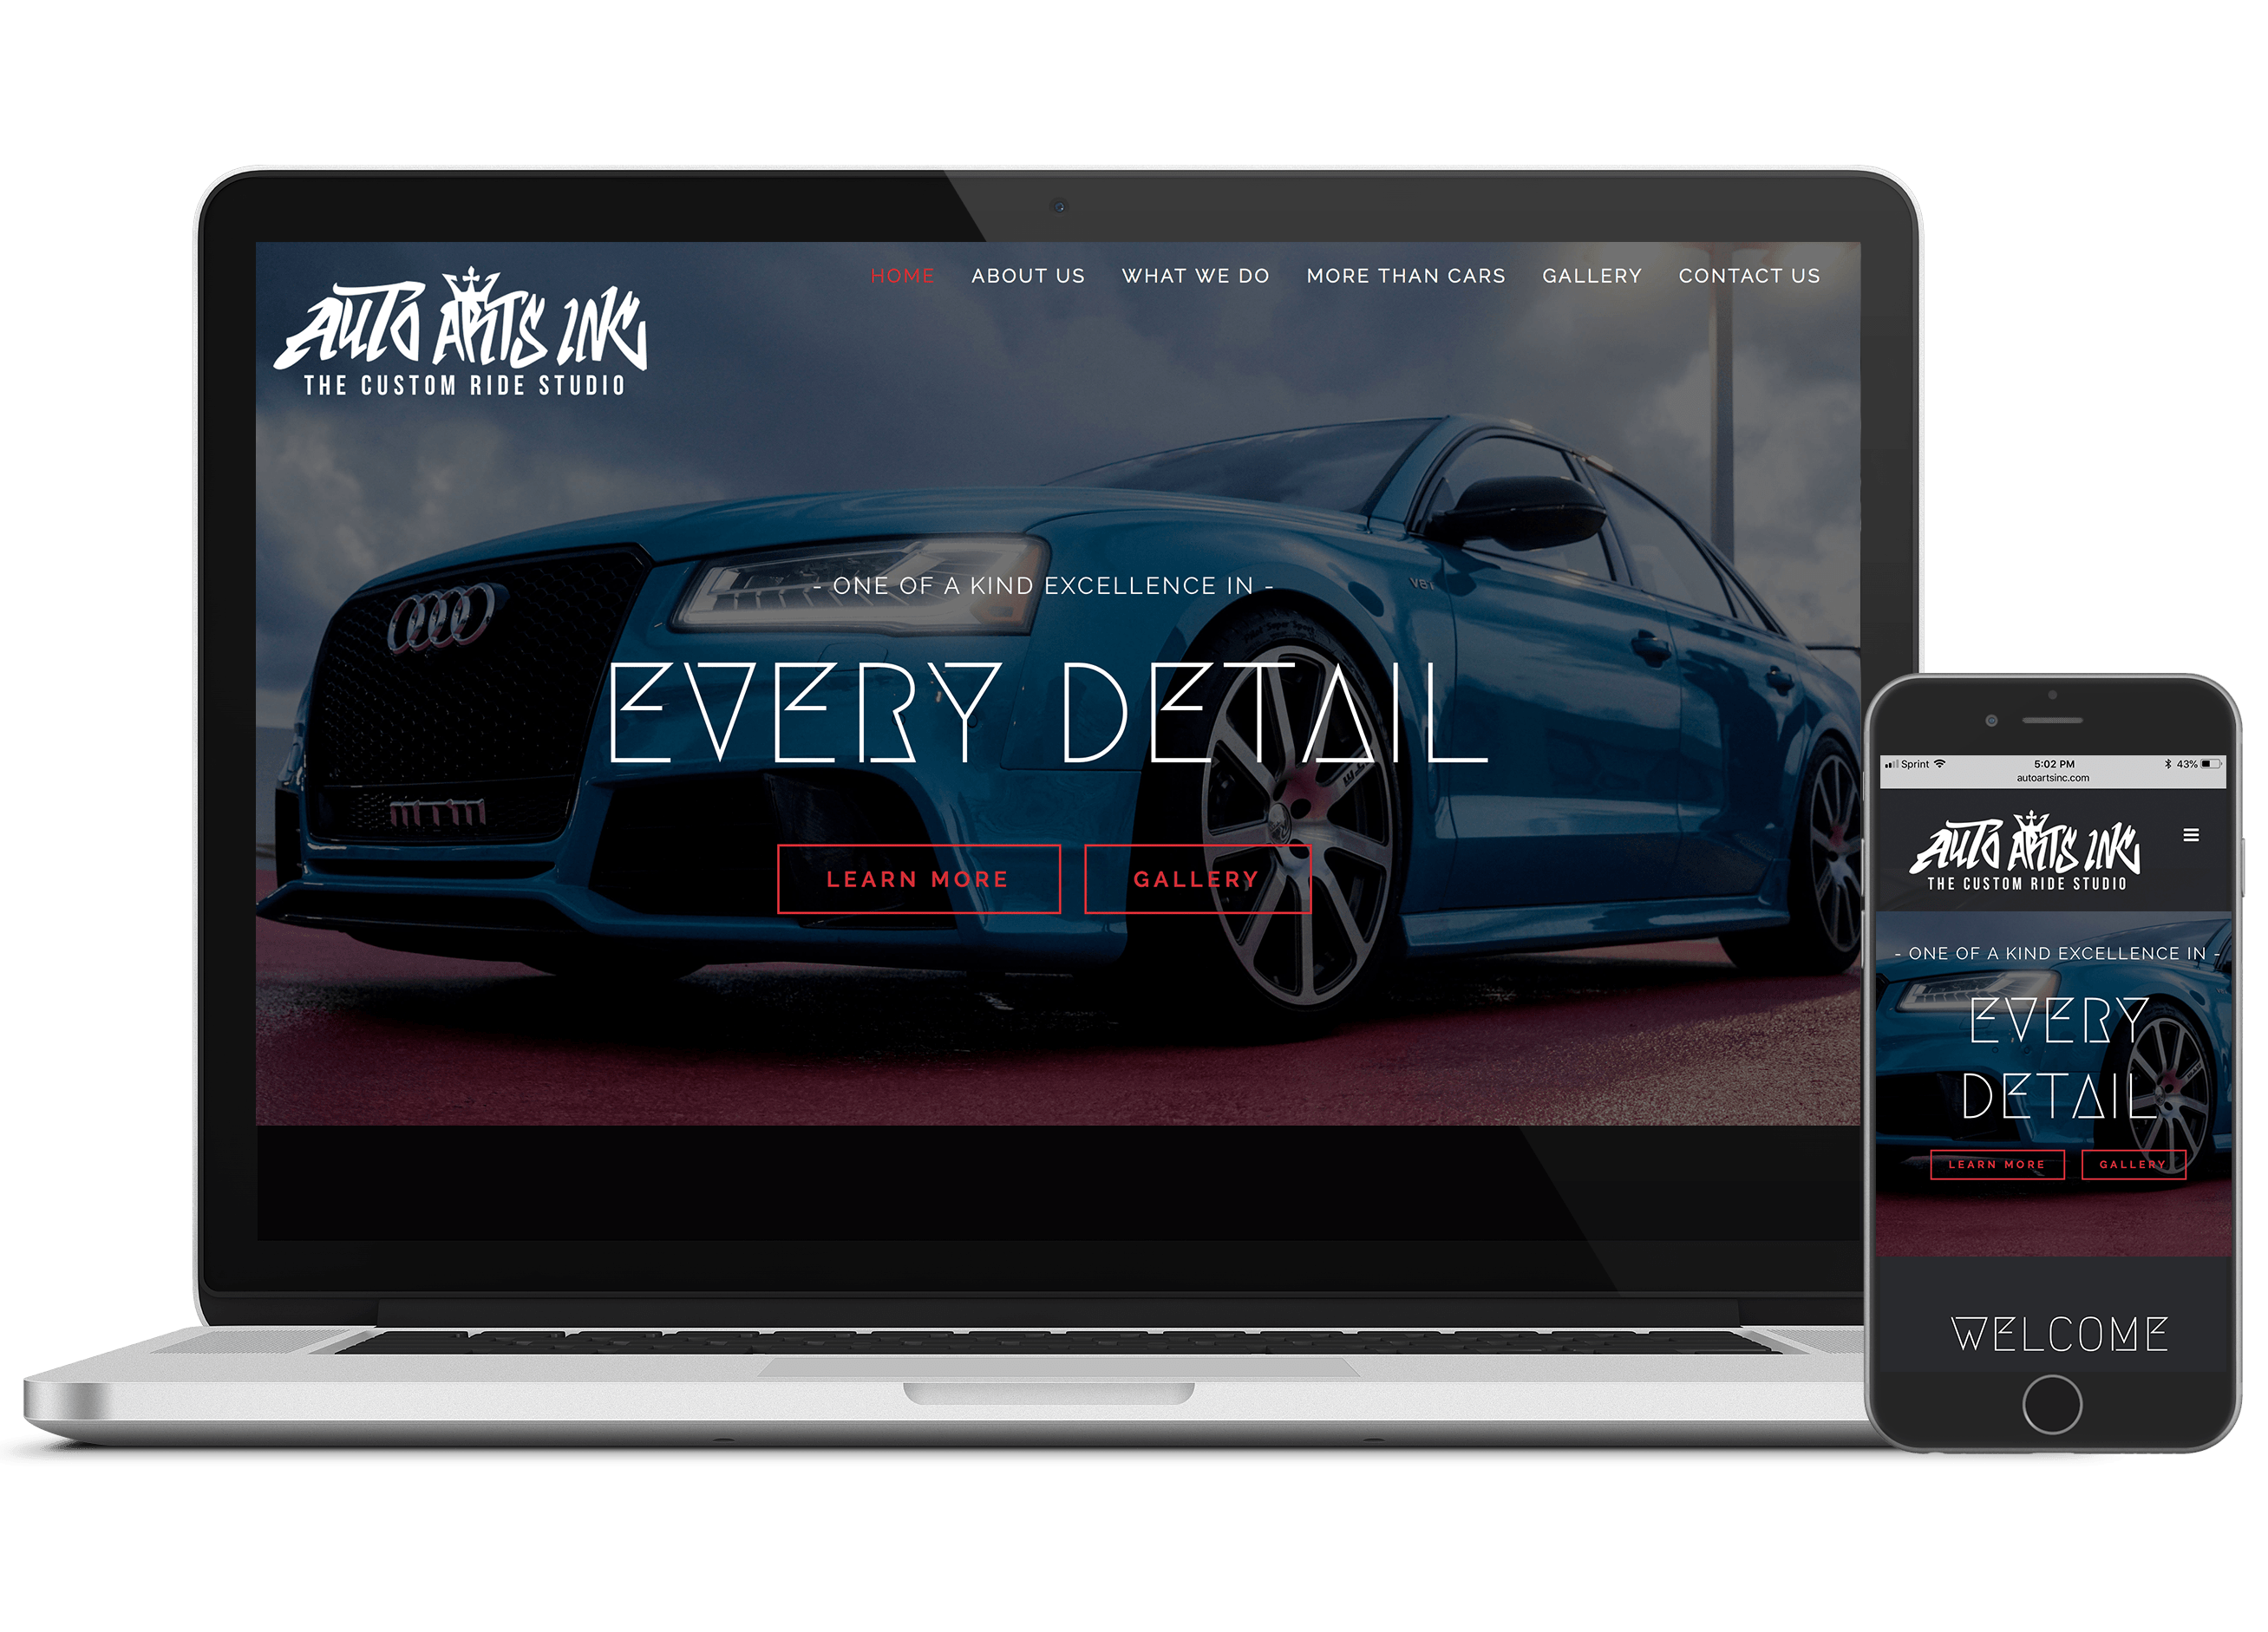 best website design video production & video marketing company raleigh north carolina - needasite digital media - best web design raleigh nc